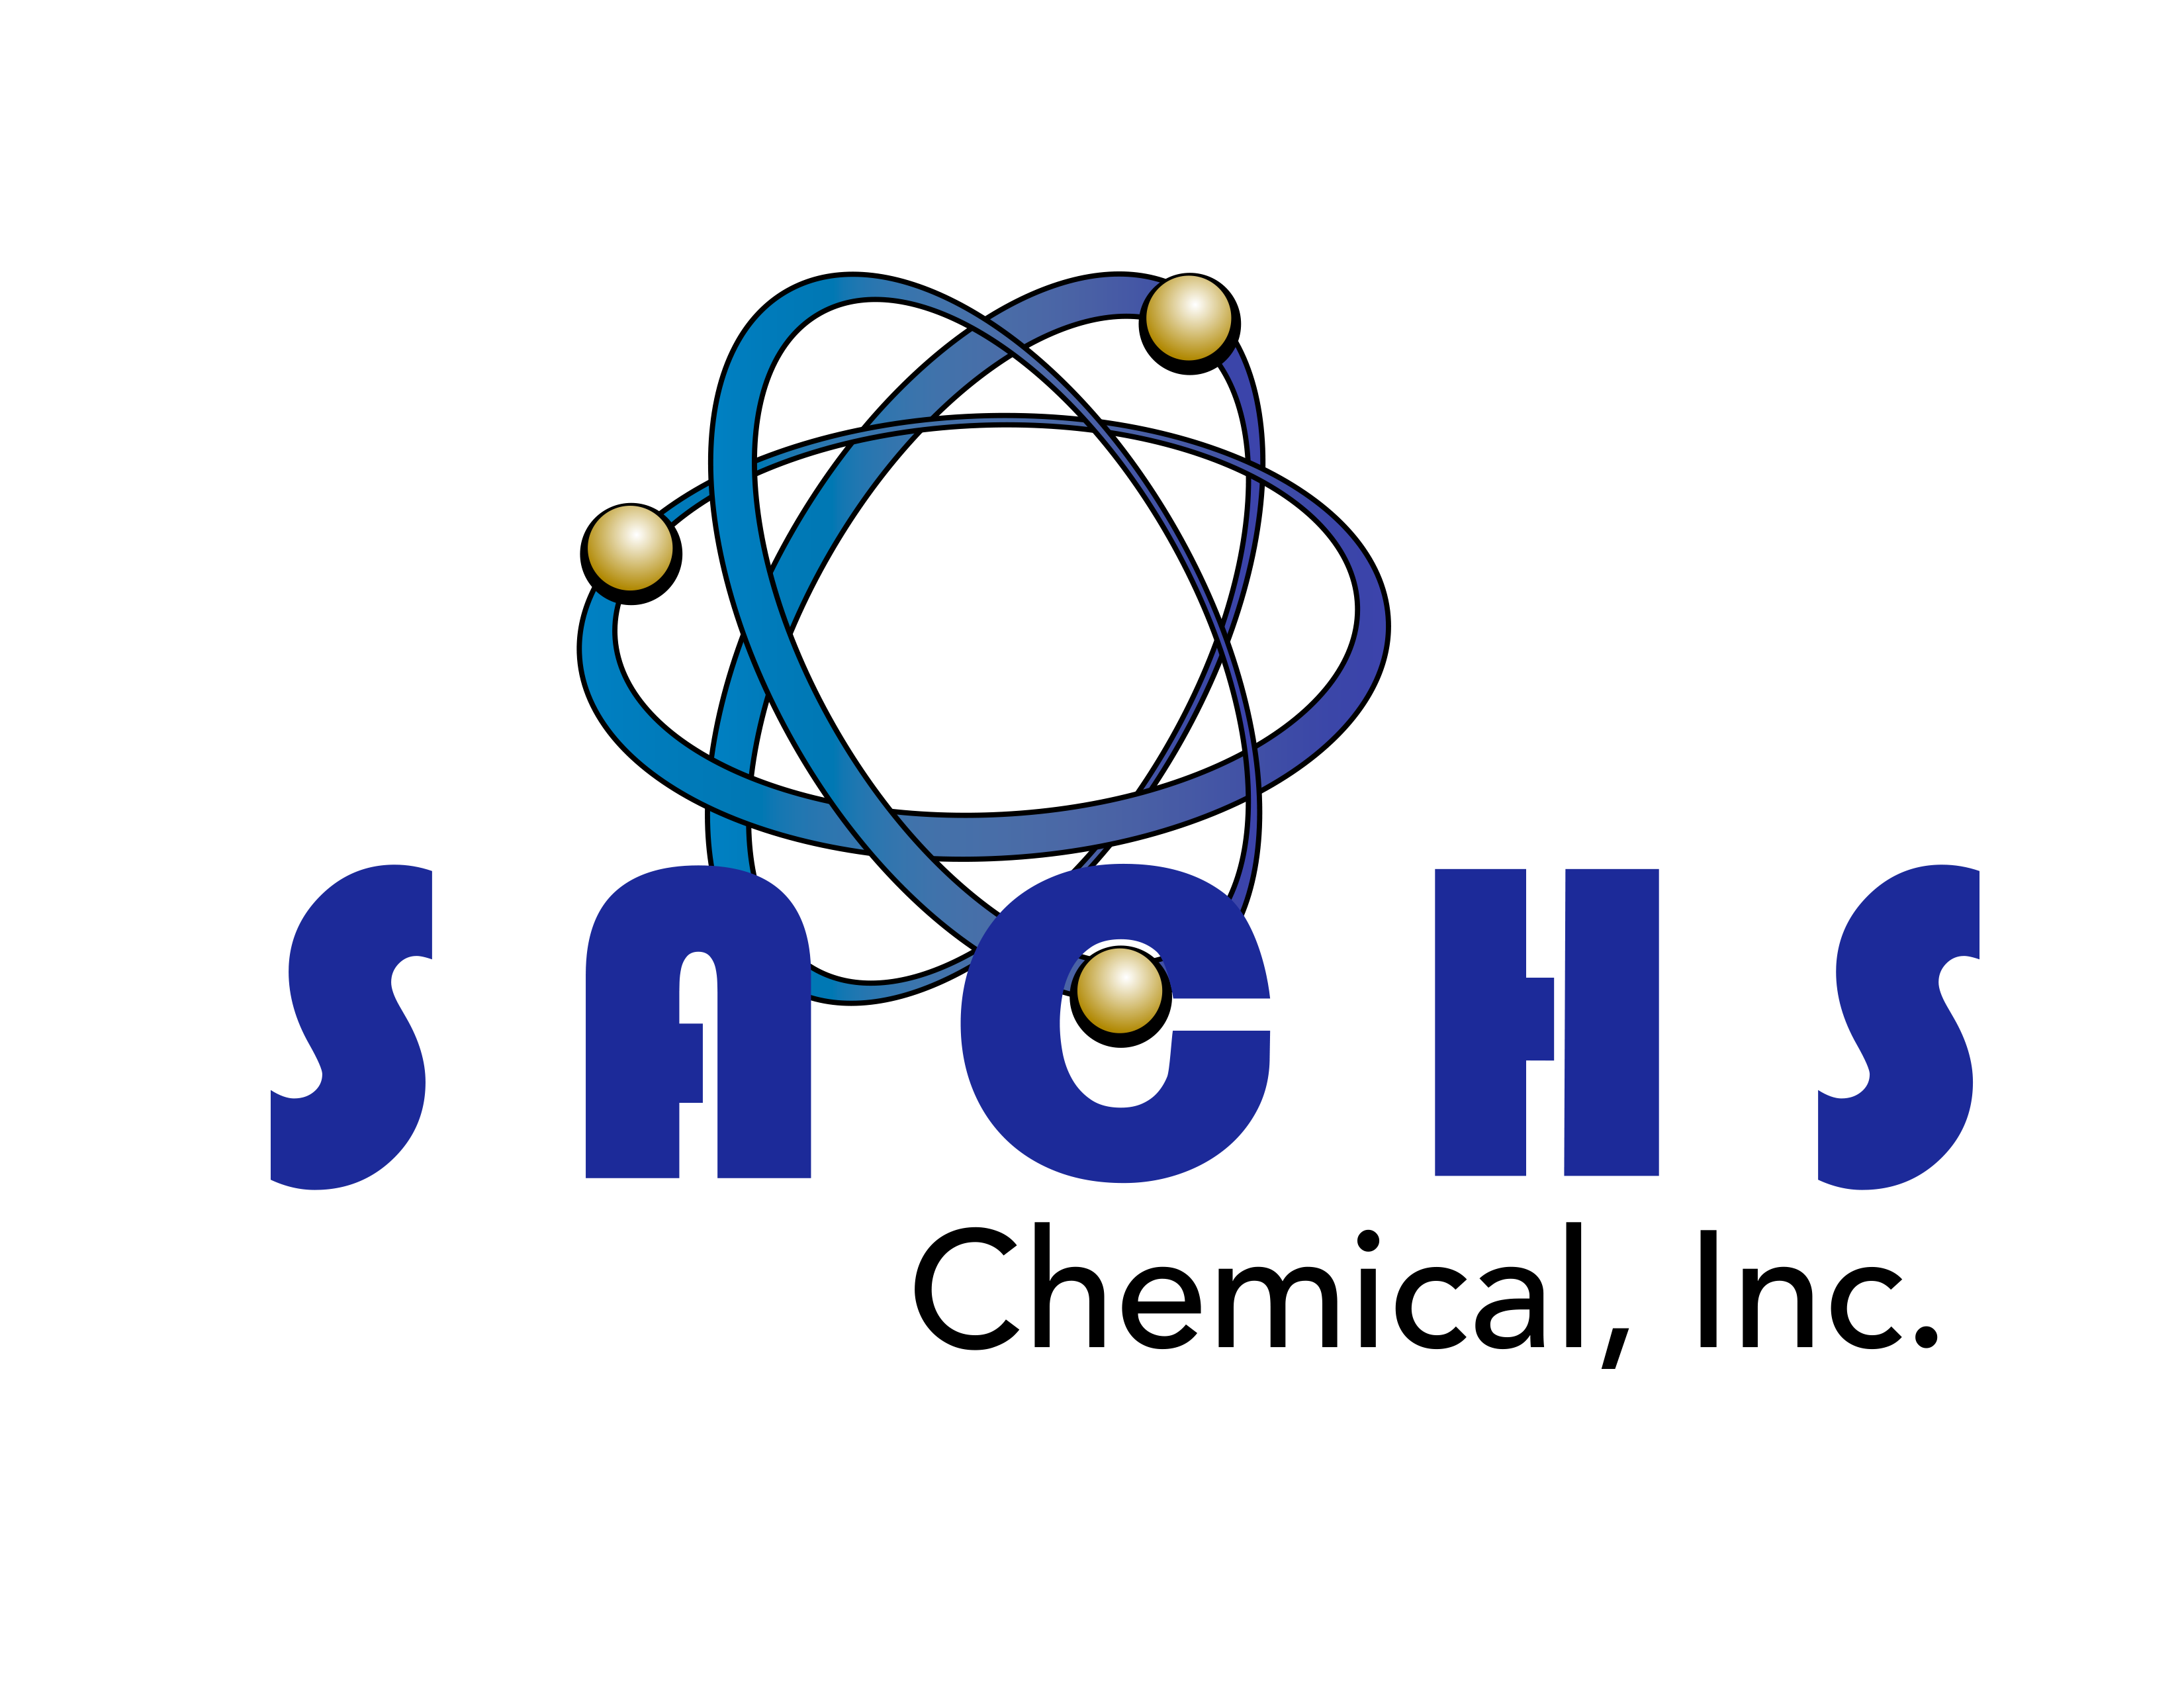 sach logo